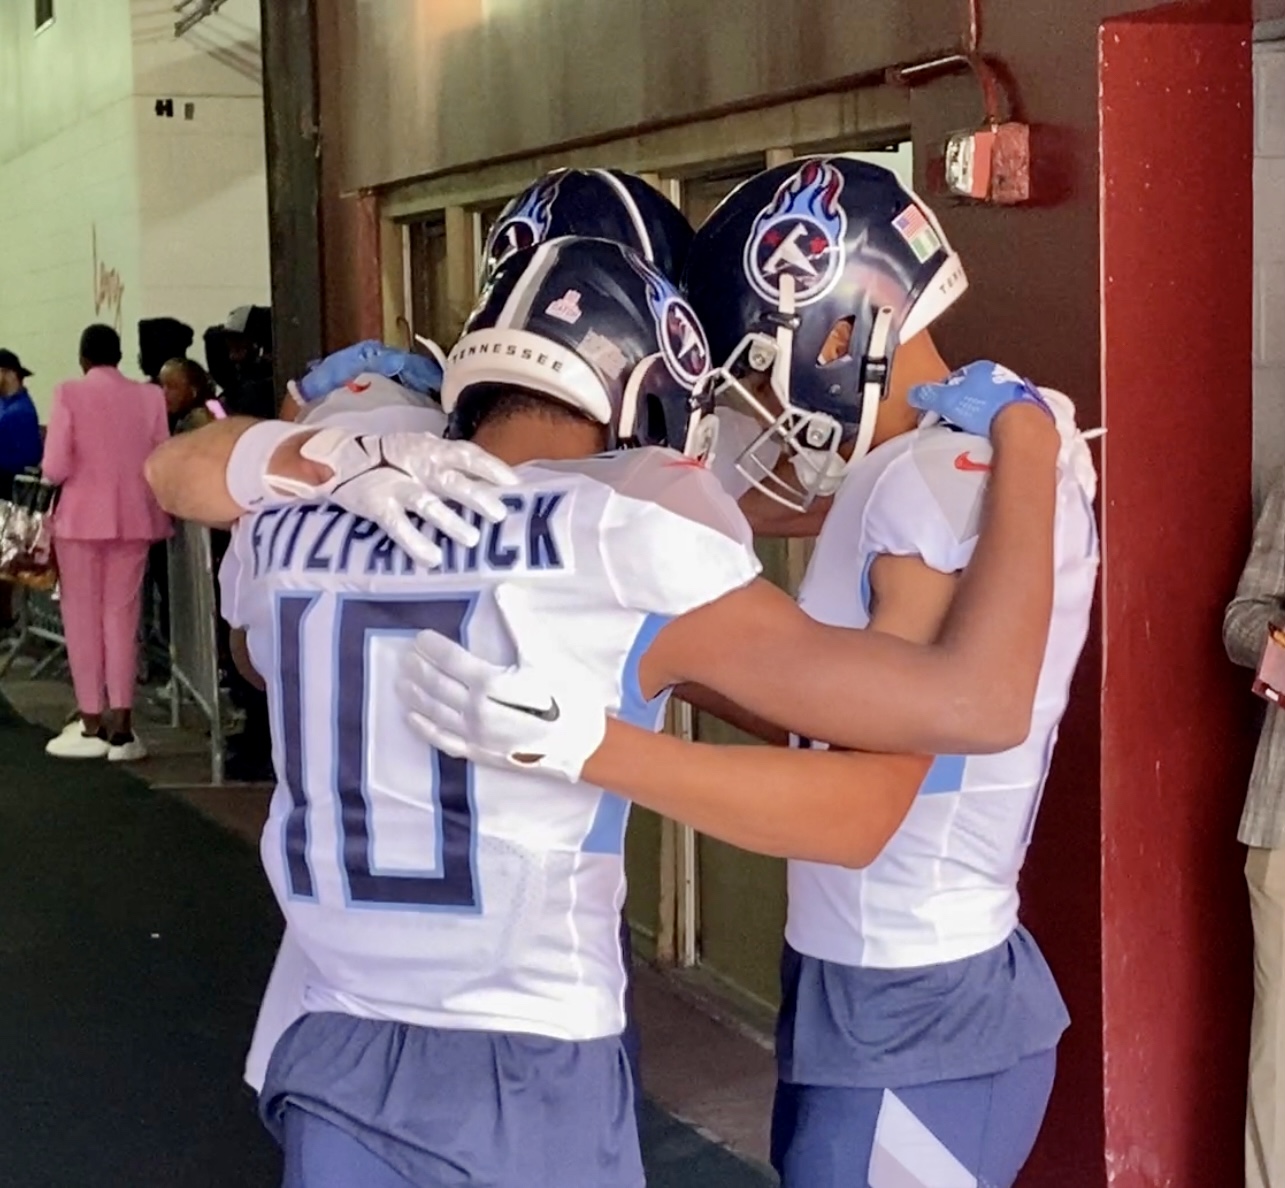 Titans receivers